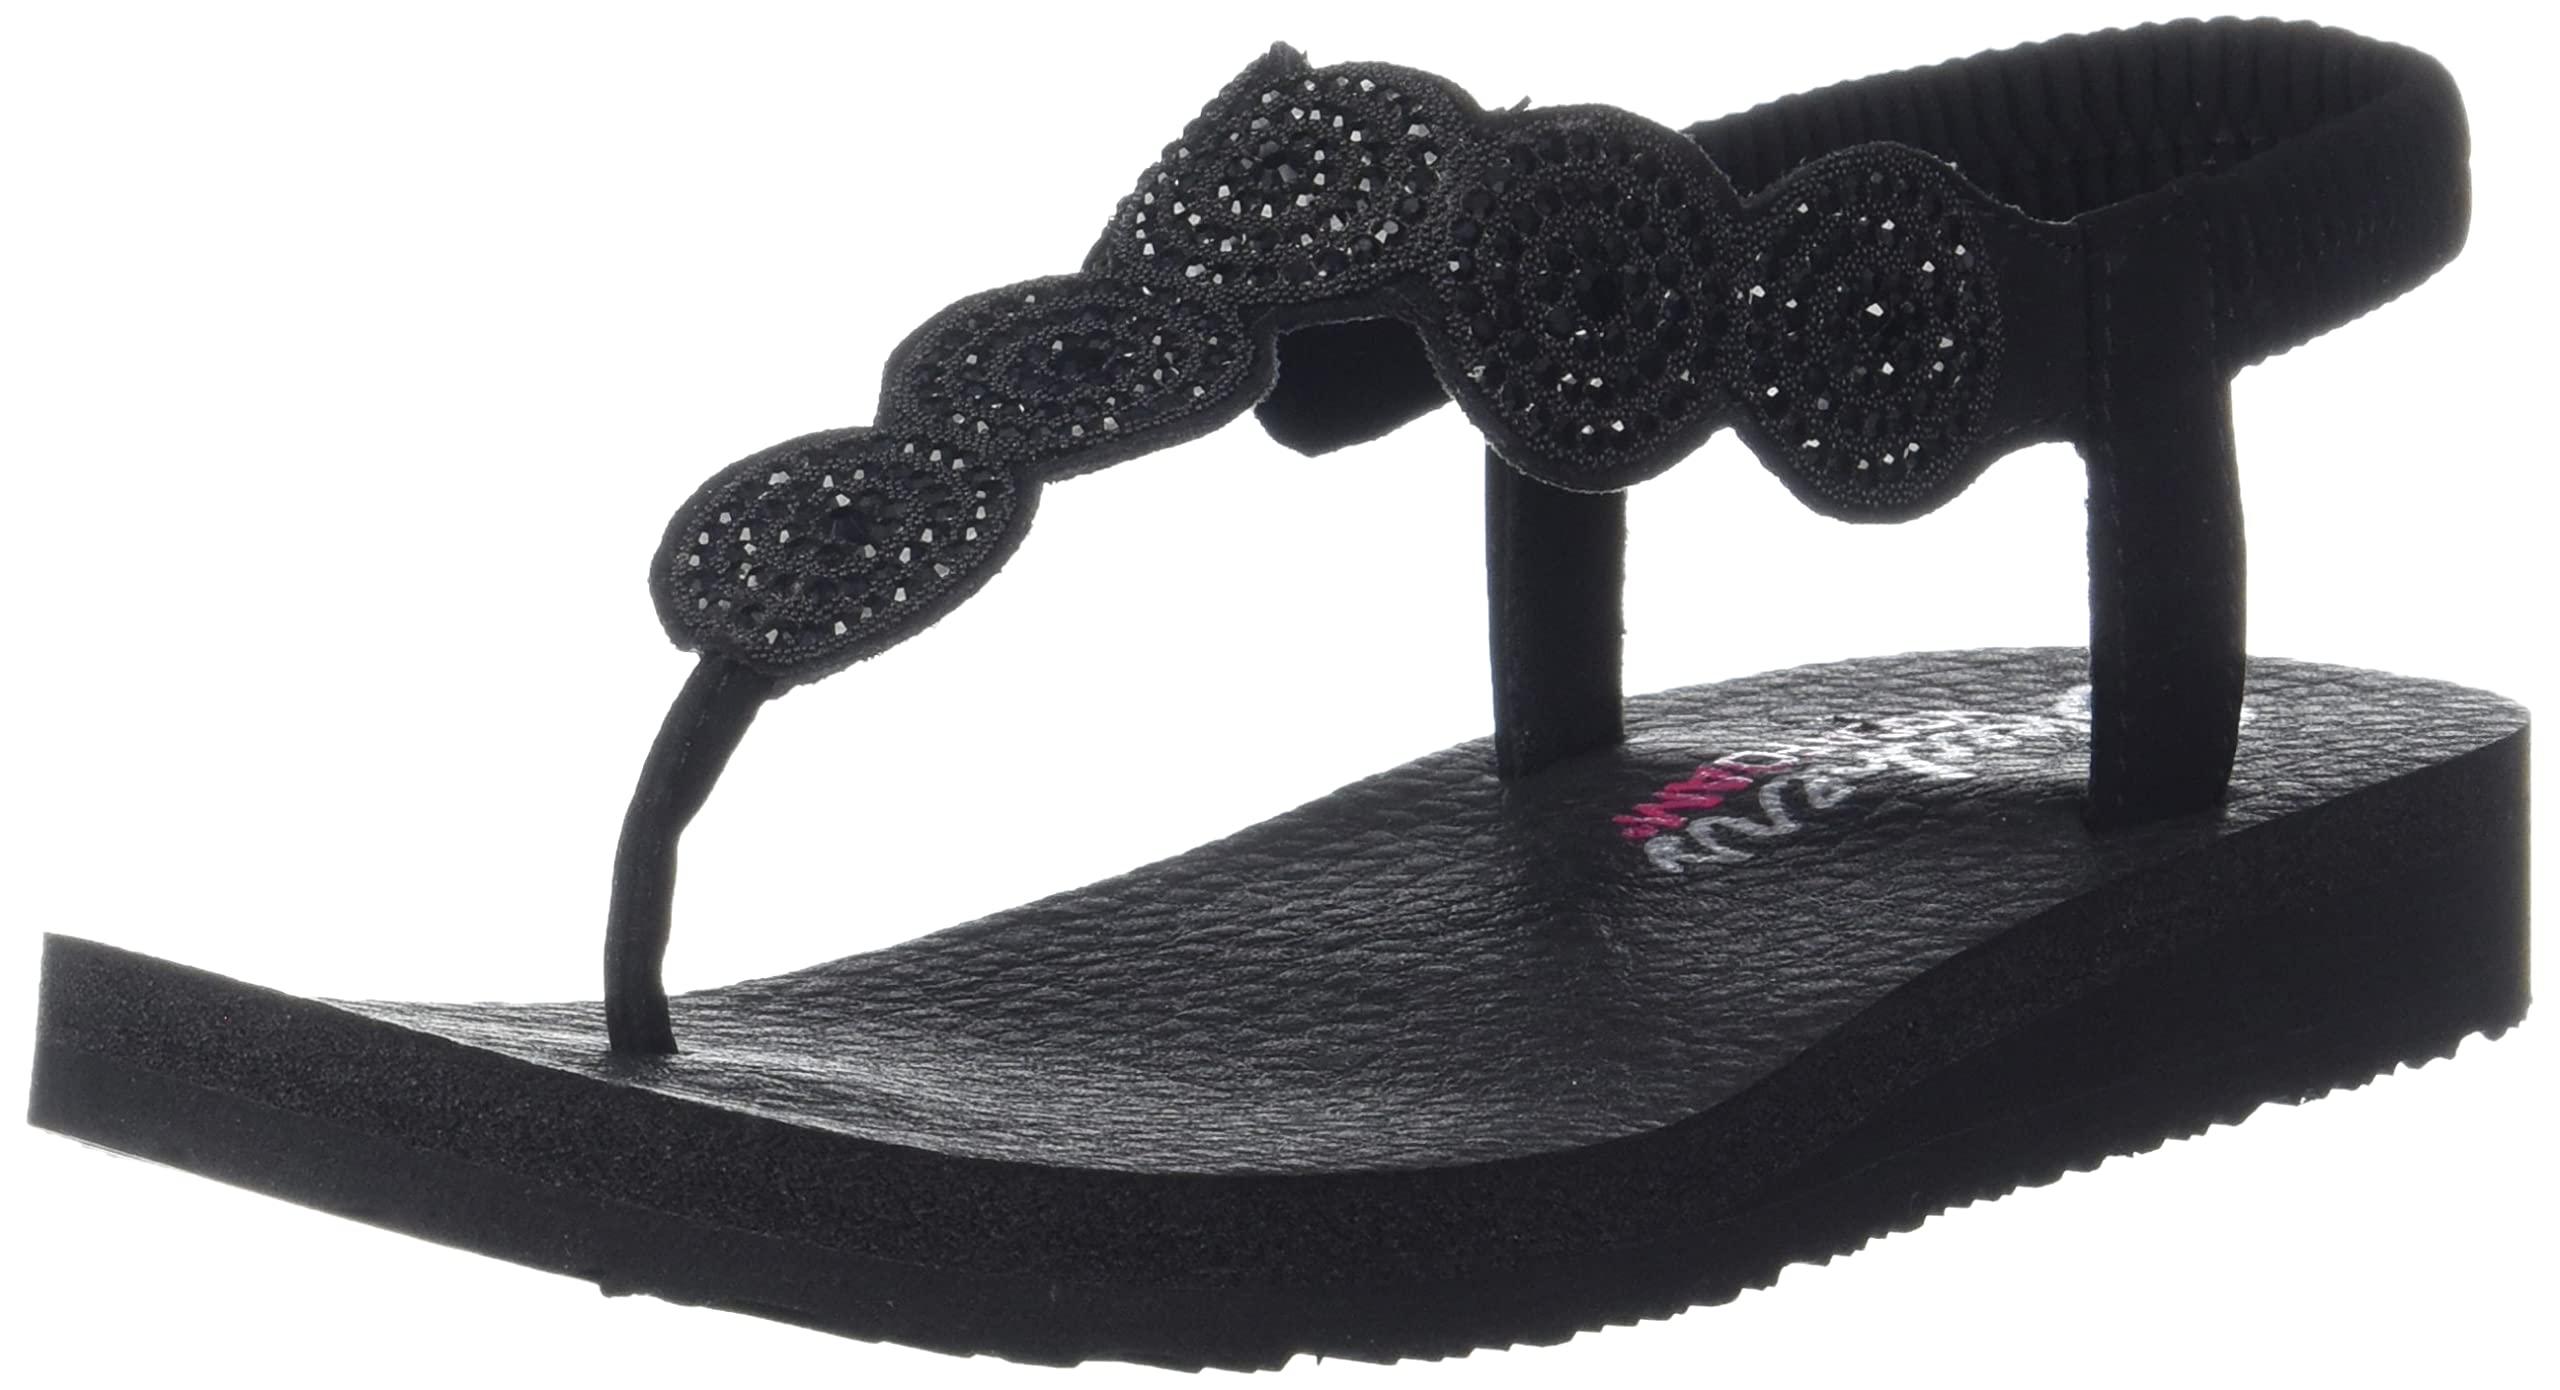 Skechers Meditation Open Toe Sandals in Black/Black (Black) - Save 22% |  Lyst